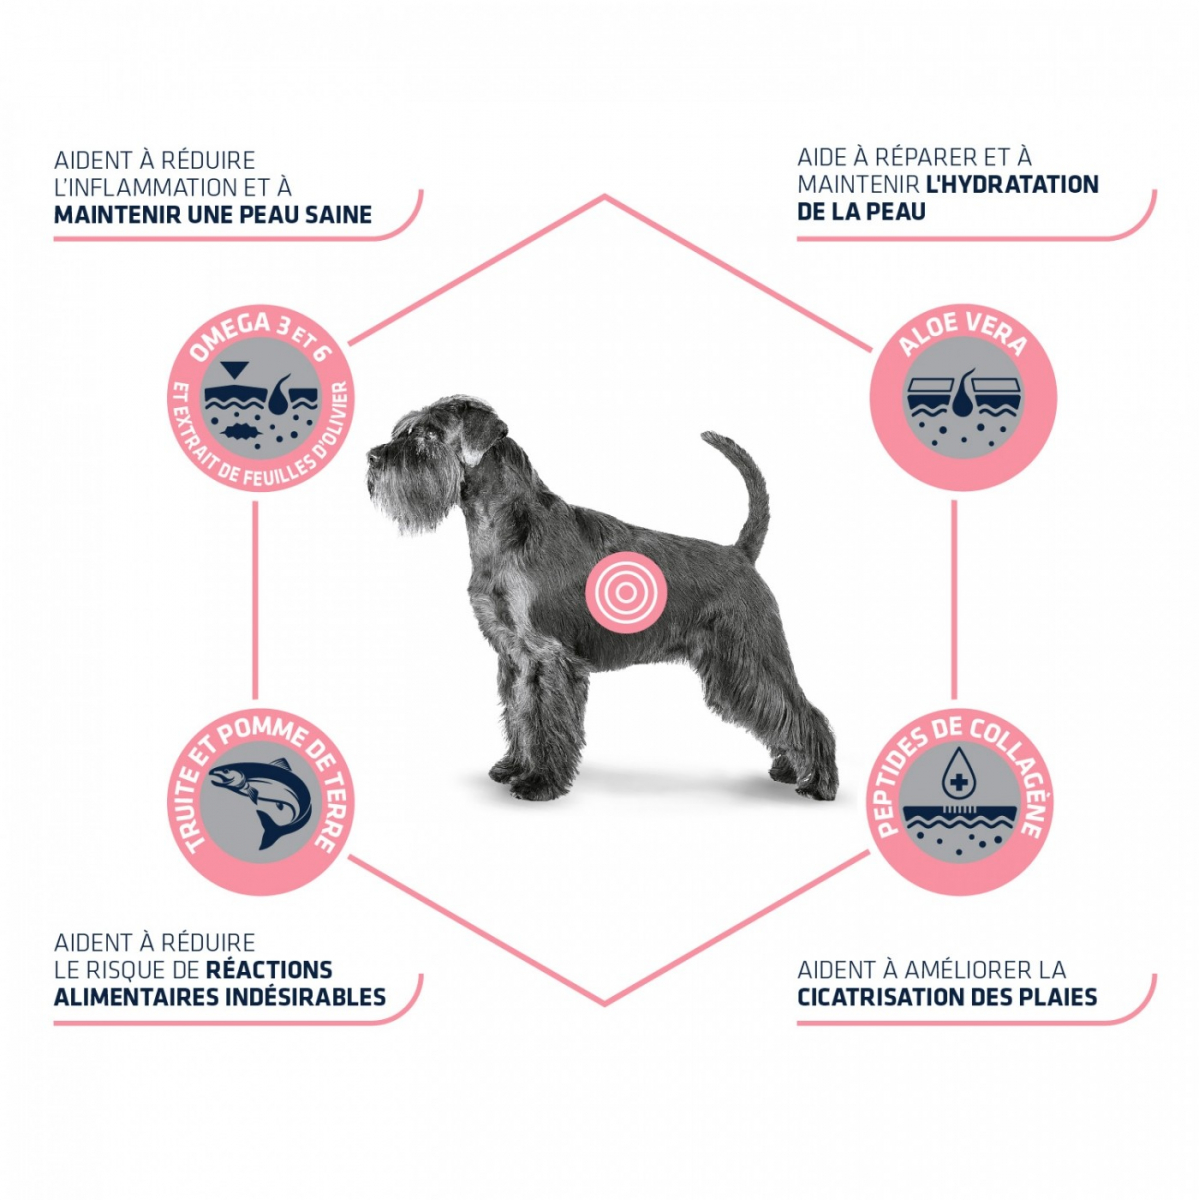 Advance Veterinary Diets Atopic Care Mini pour chien de petite taille